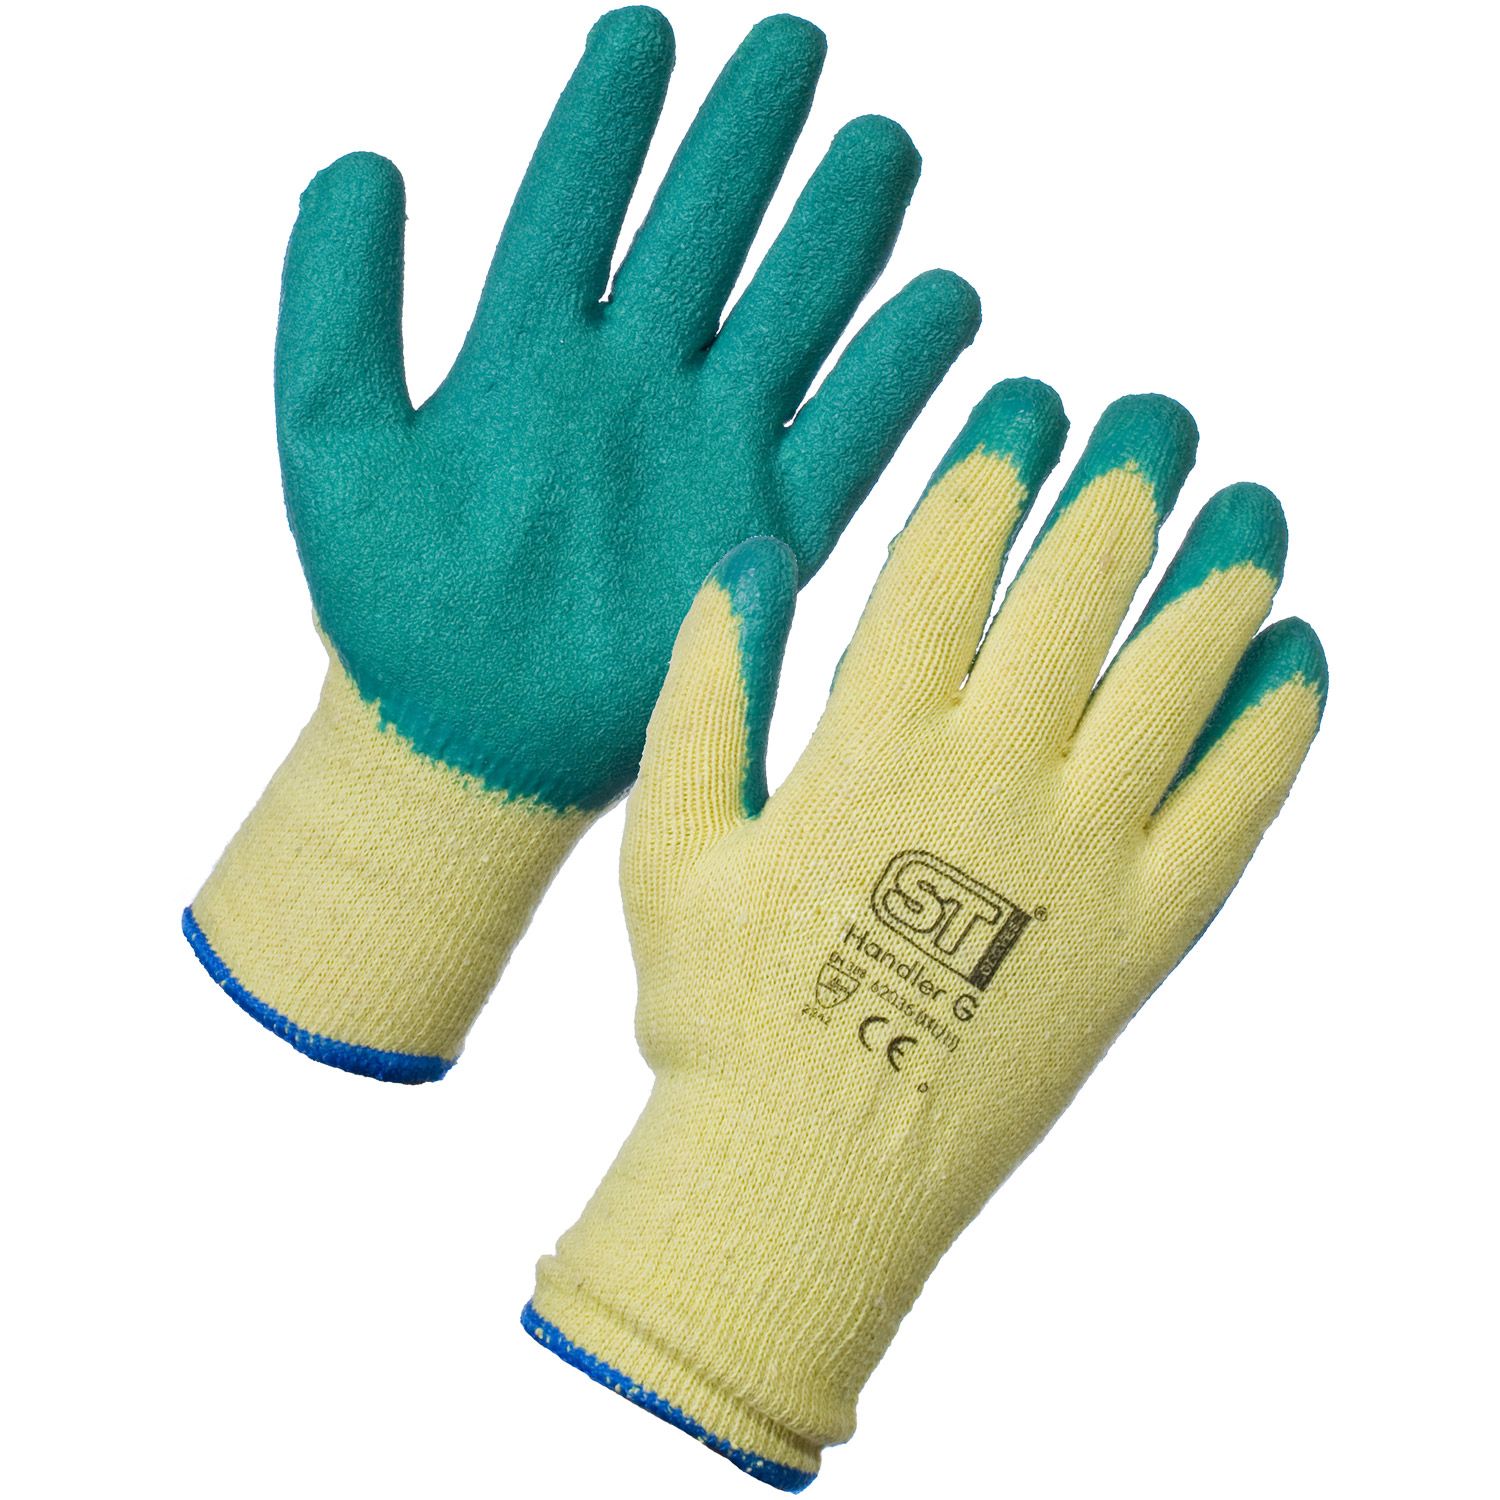 General Handler glove Latex coated (Green) - M - 12 Pack